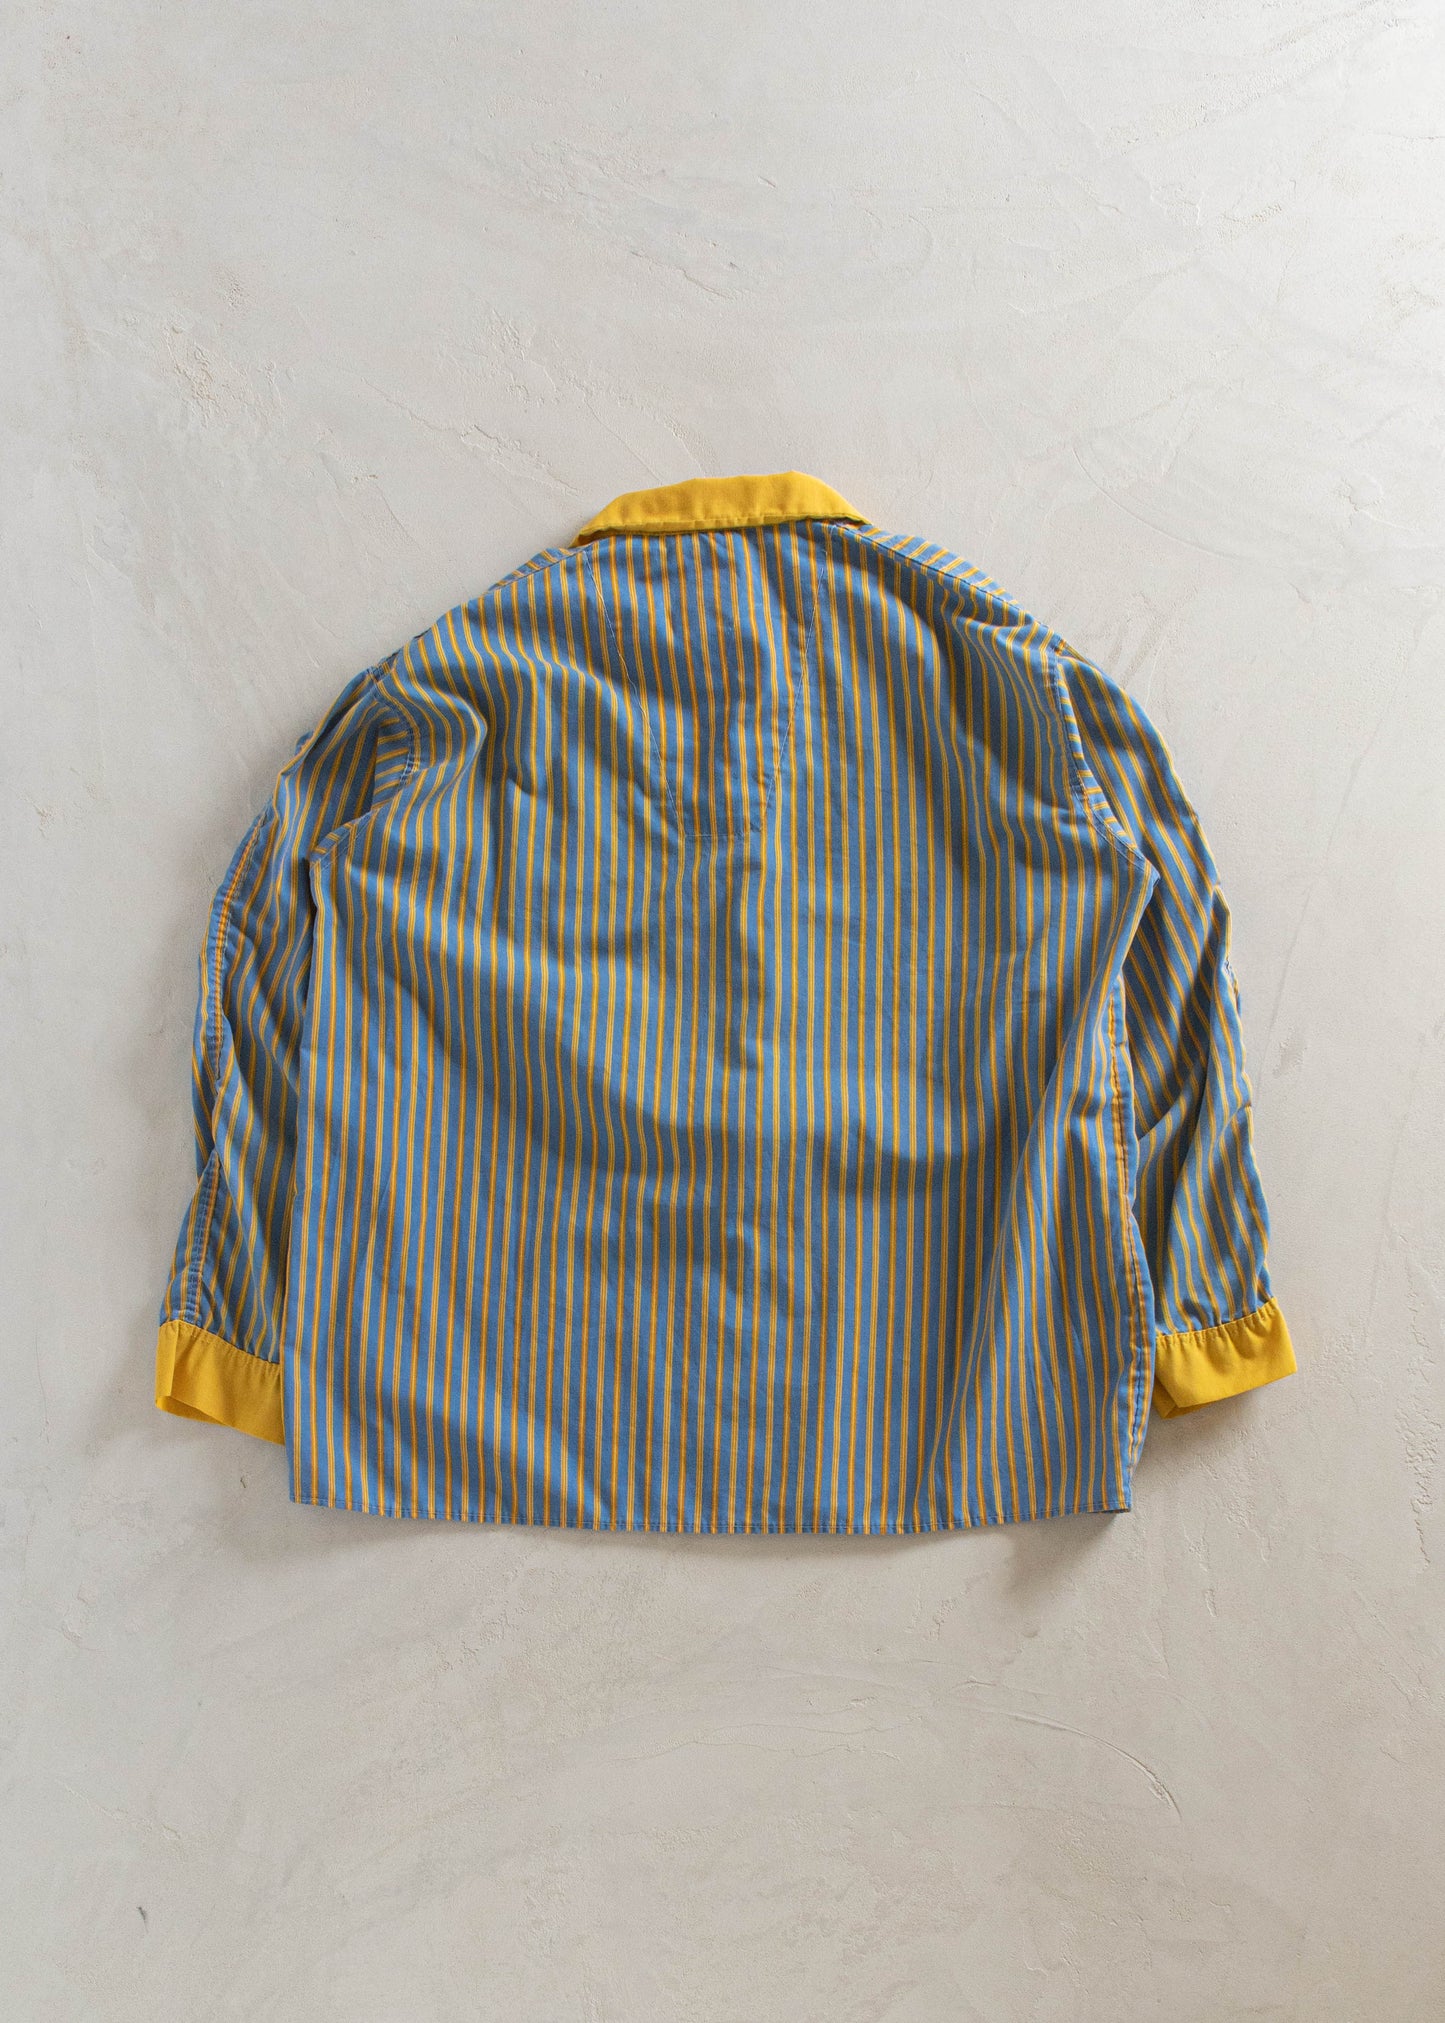 1960s Hall of Fame Stripe Pattern Long Sleeve Button Up Pajama Shirt Size XL/2XL